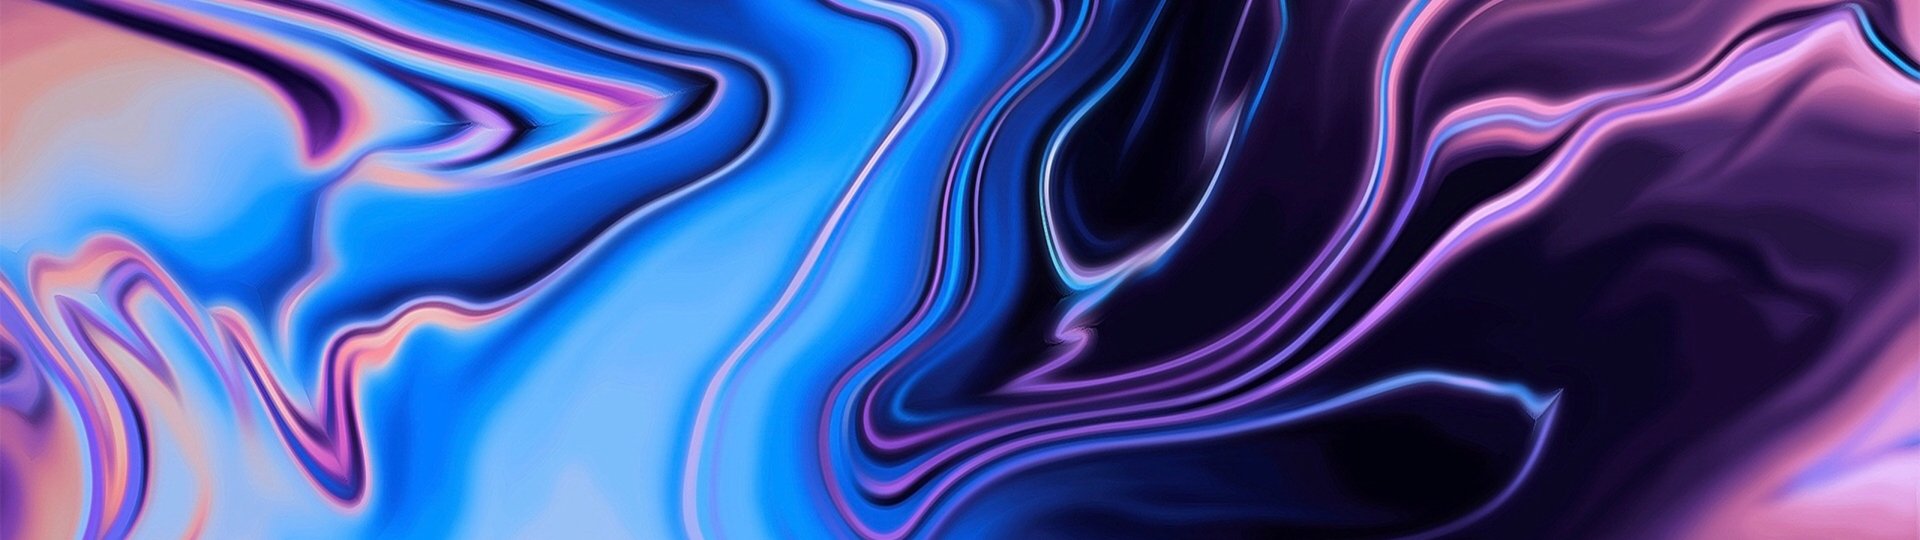 Vibrant HD Abstract Wallpaper